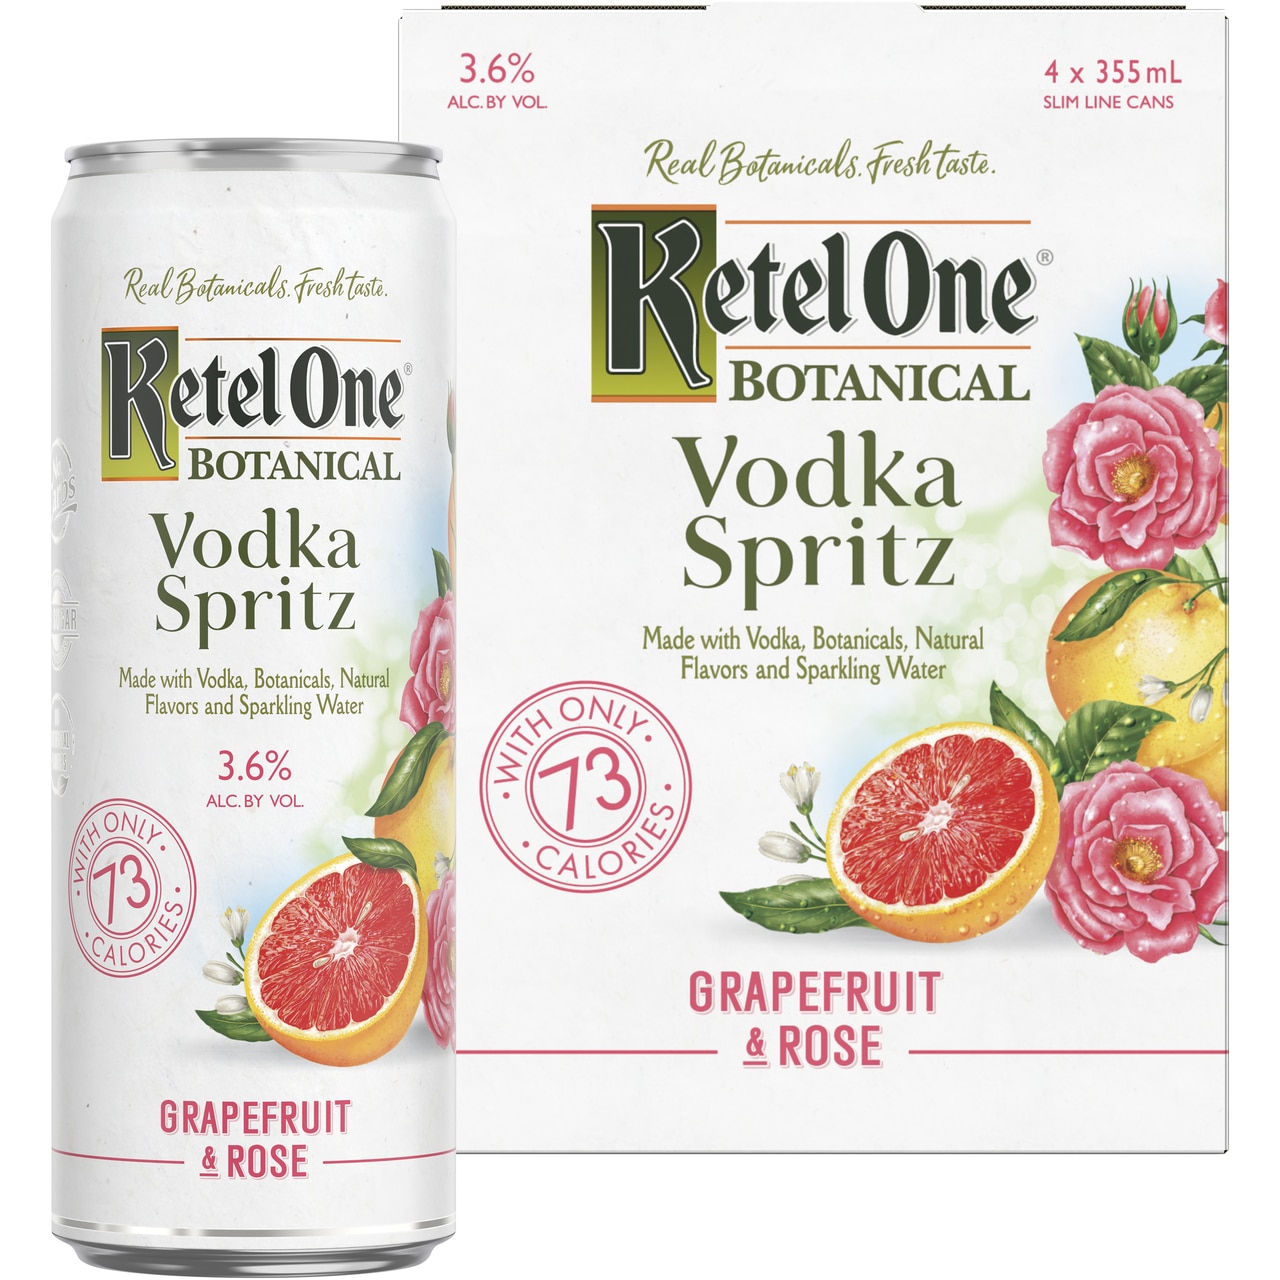 images/seasonal_wine/KetelOne Vodka Spritz Grapefruit & Rose.jpg